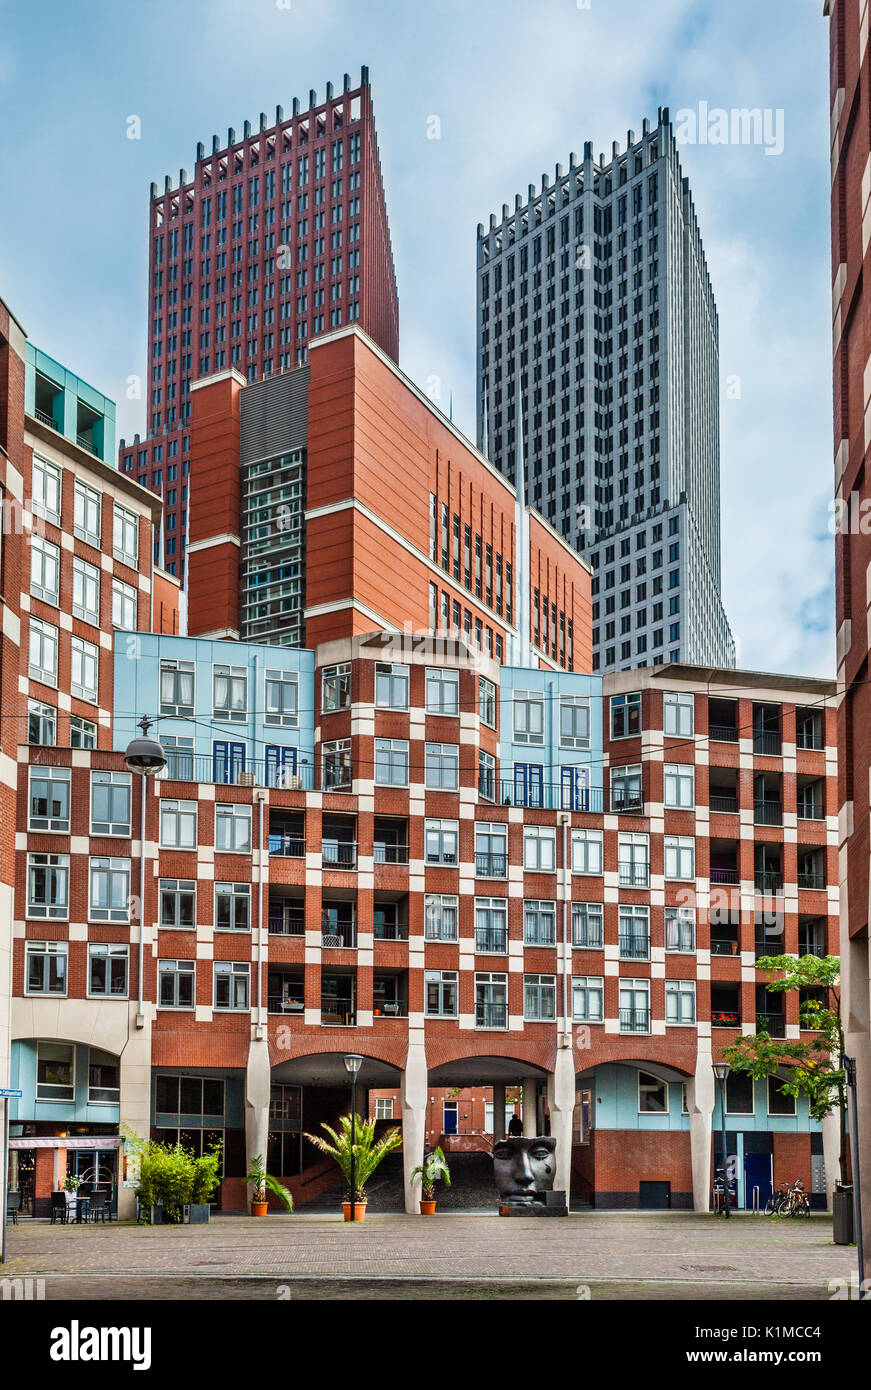 Netherlands, South Holland, The Hague (Den Haag), apartment buildings at Muzenplein modern urban development Stock Photo